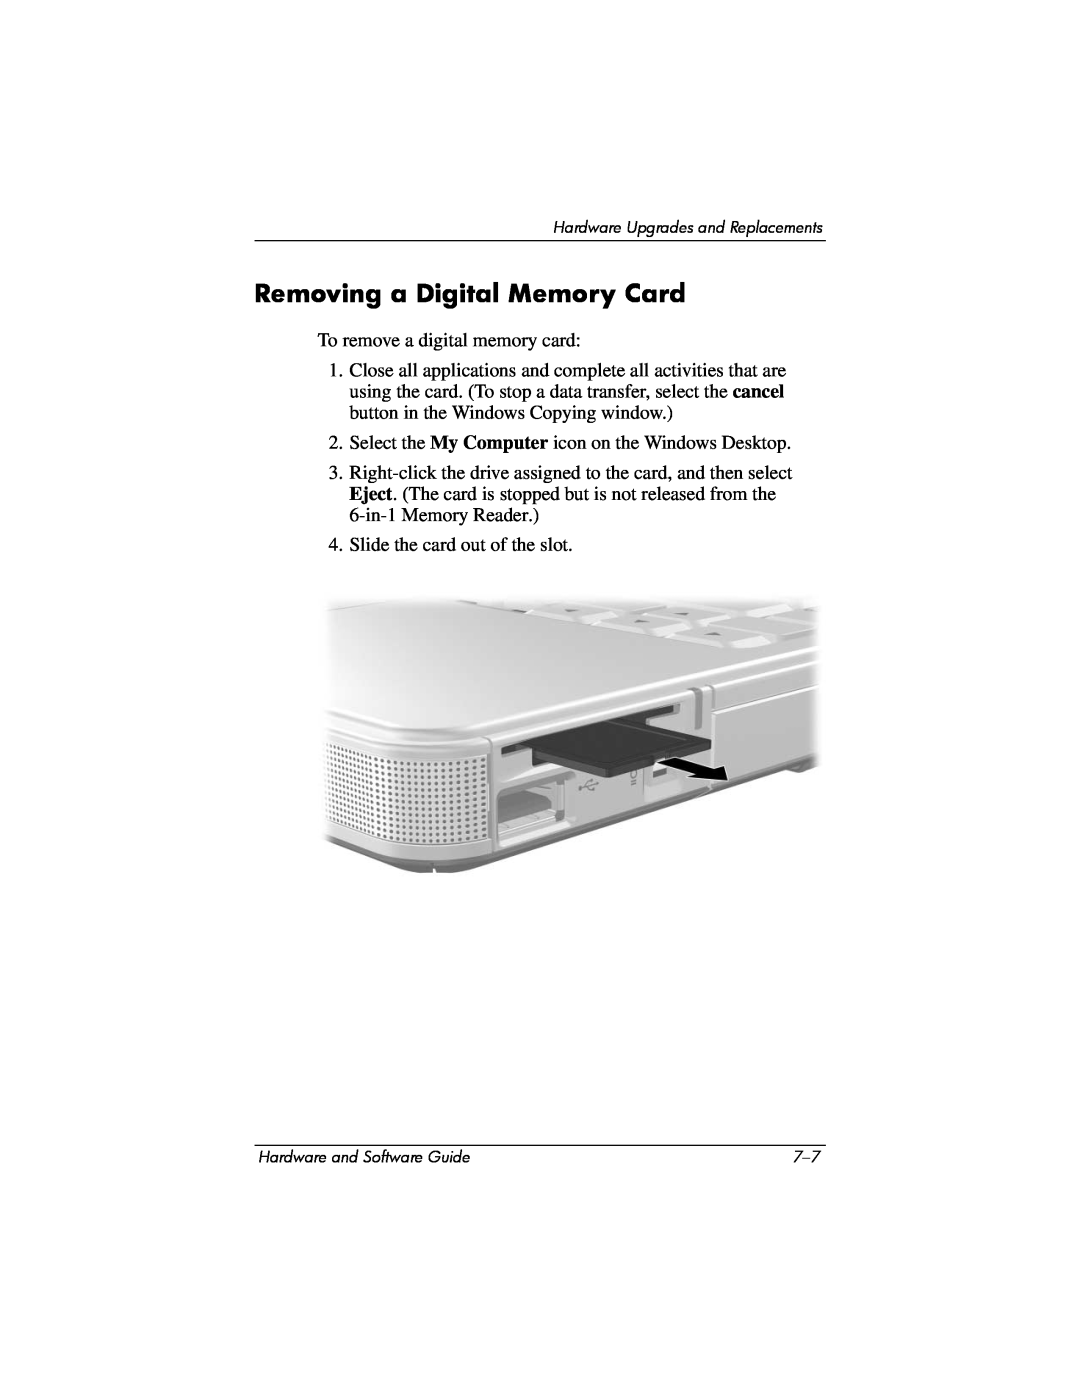 Compaq Presario M2000 manual Removing a Digital Memory Card 